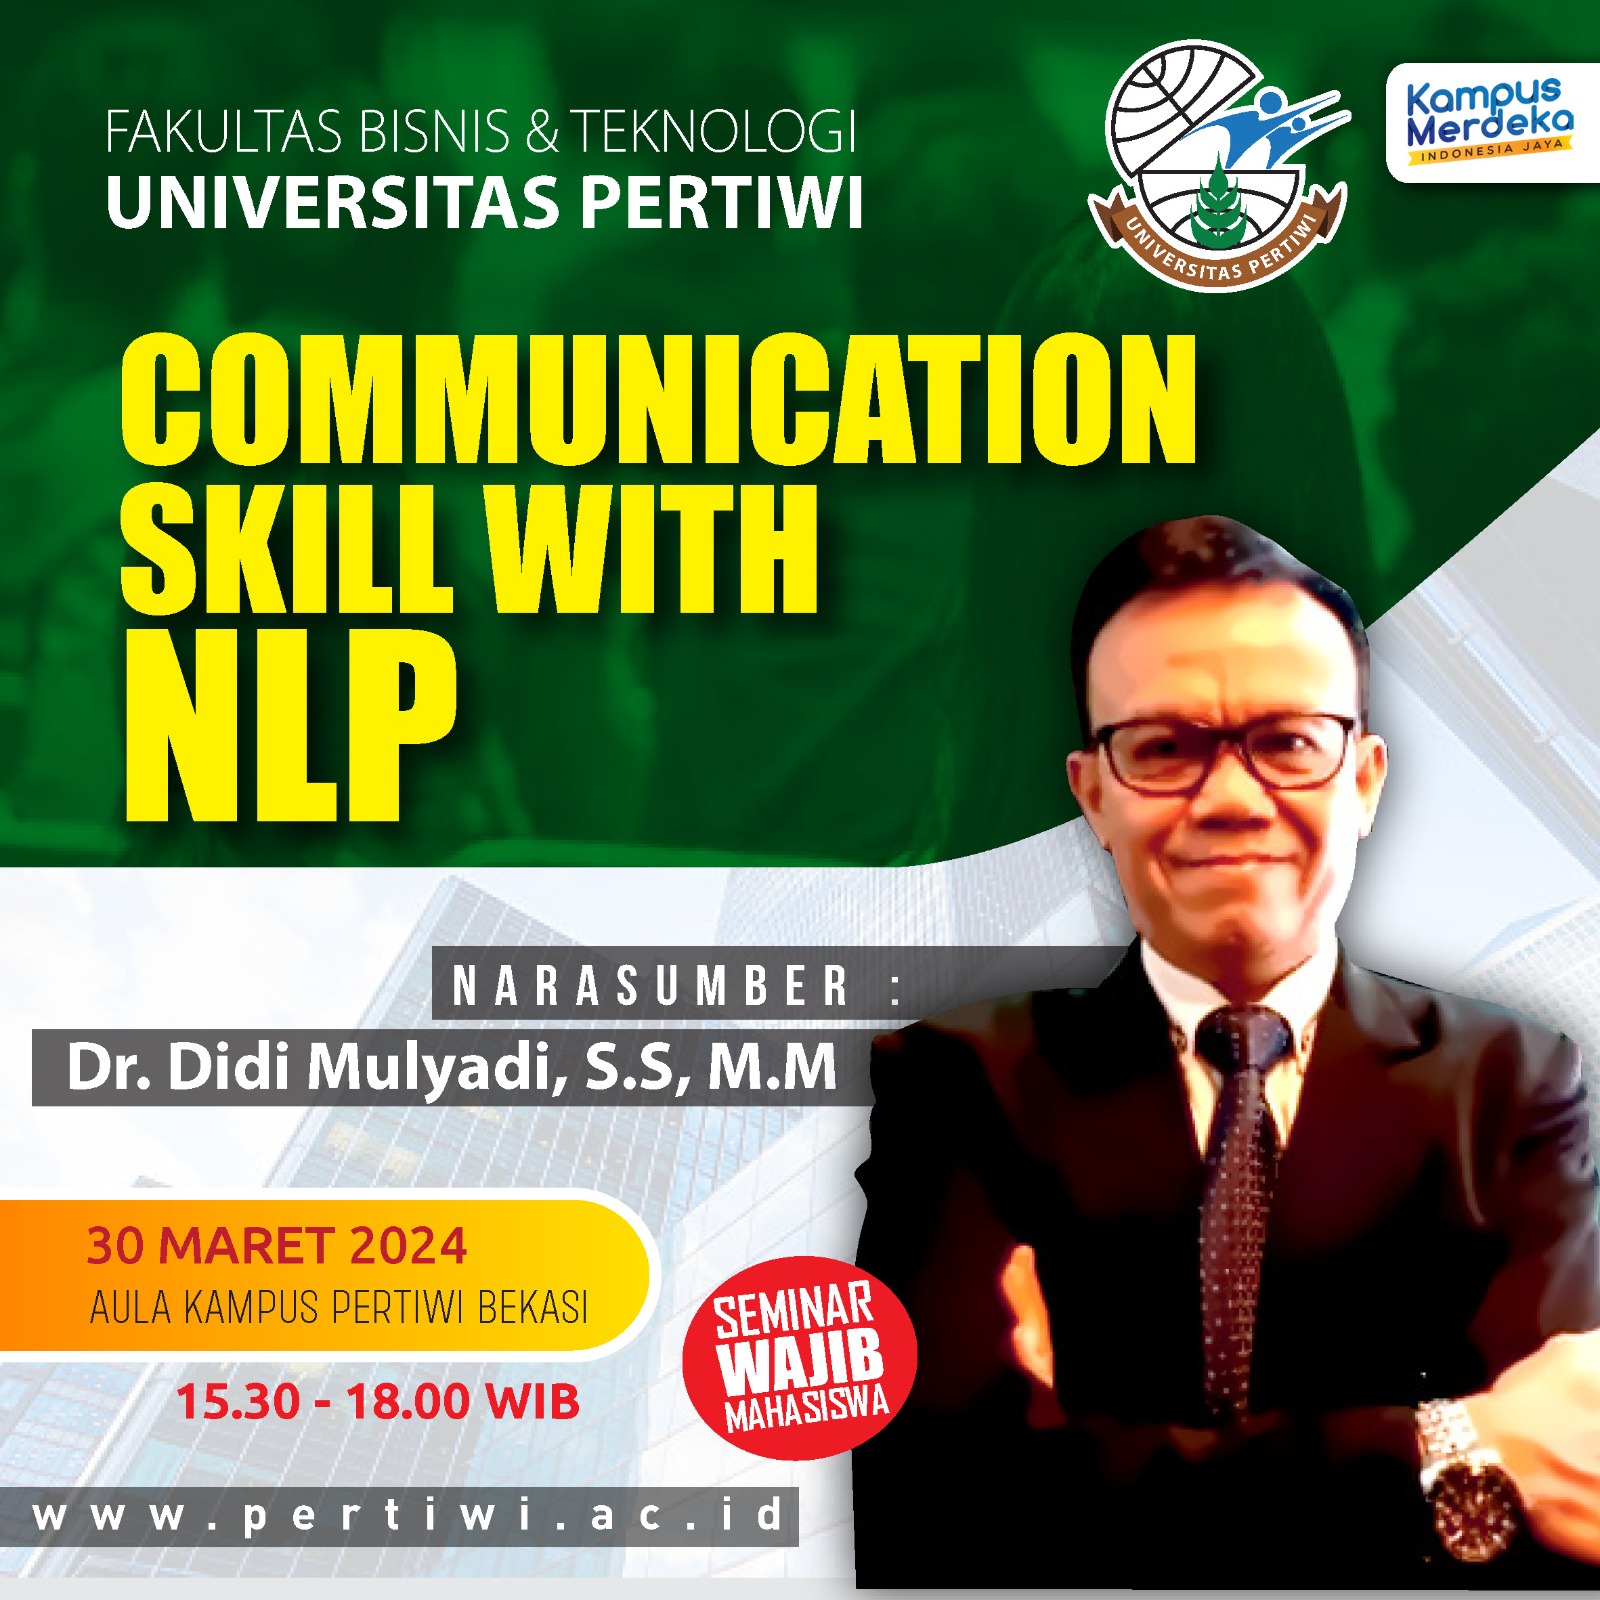 Sebentar Lagi Akan Ada Seminar Wajib tentang Communication Skill with NLP